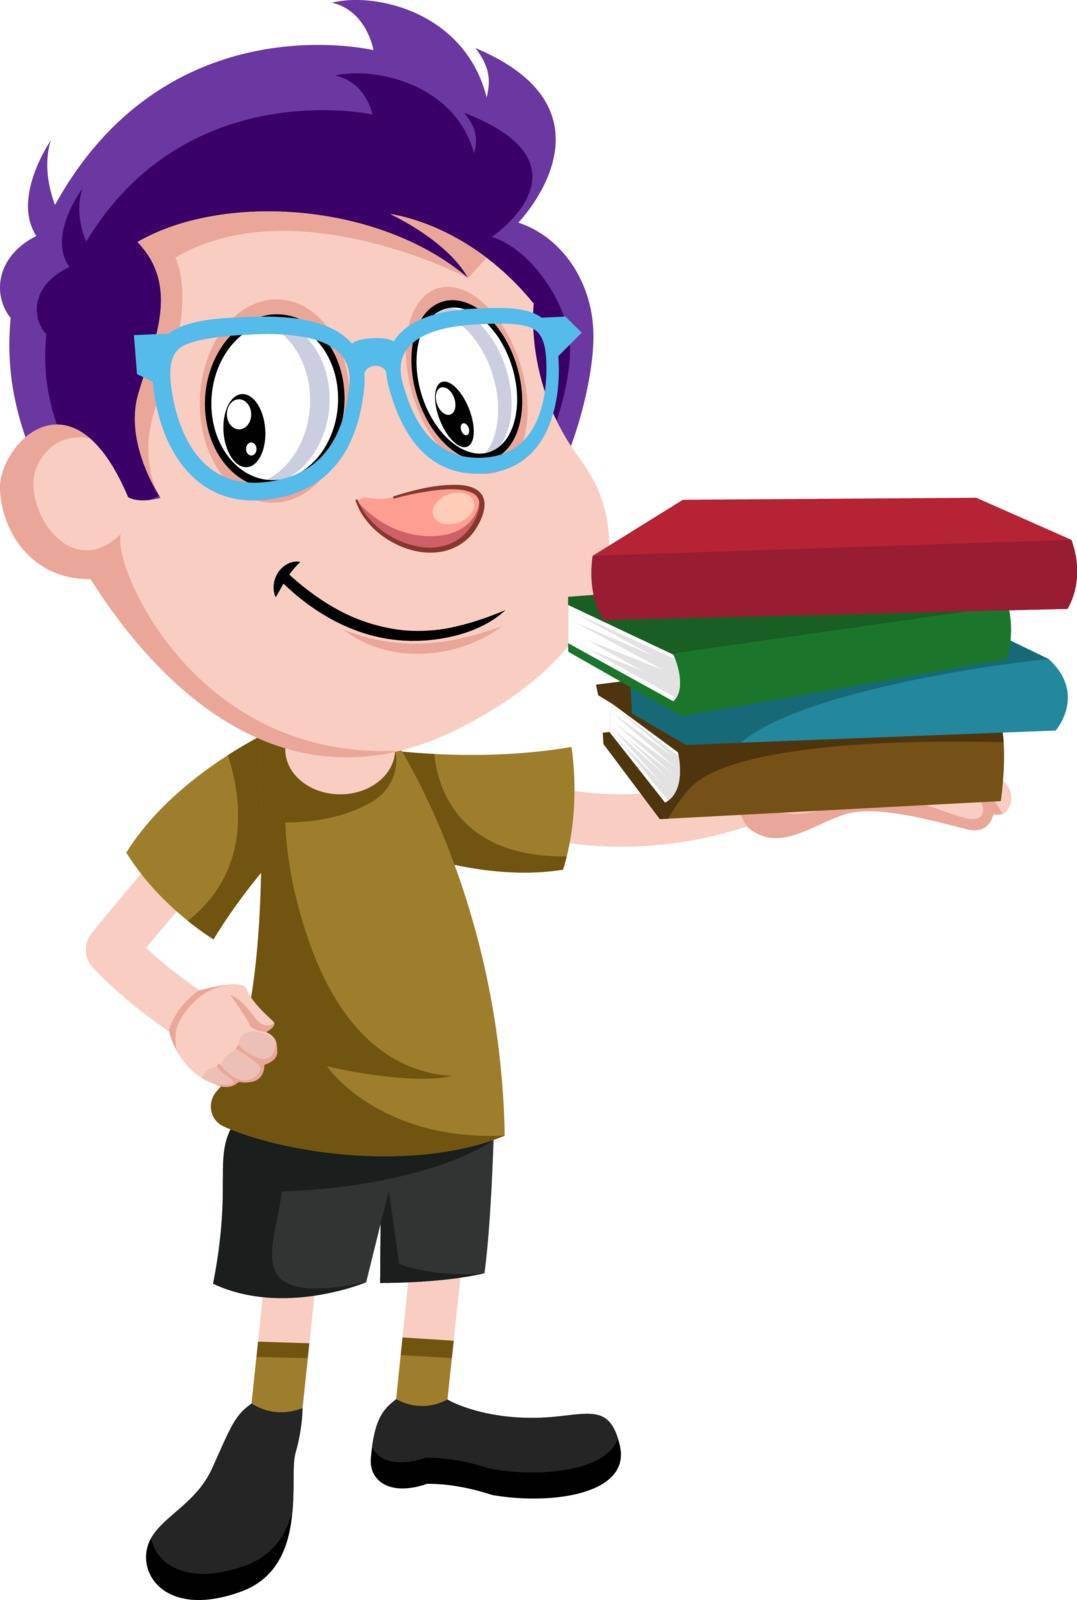 Boy holding books, illustration, vector on white background.